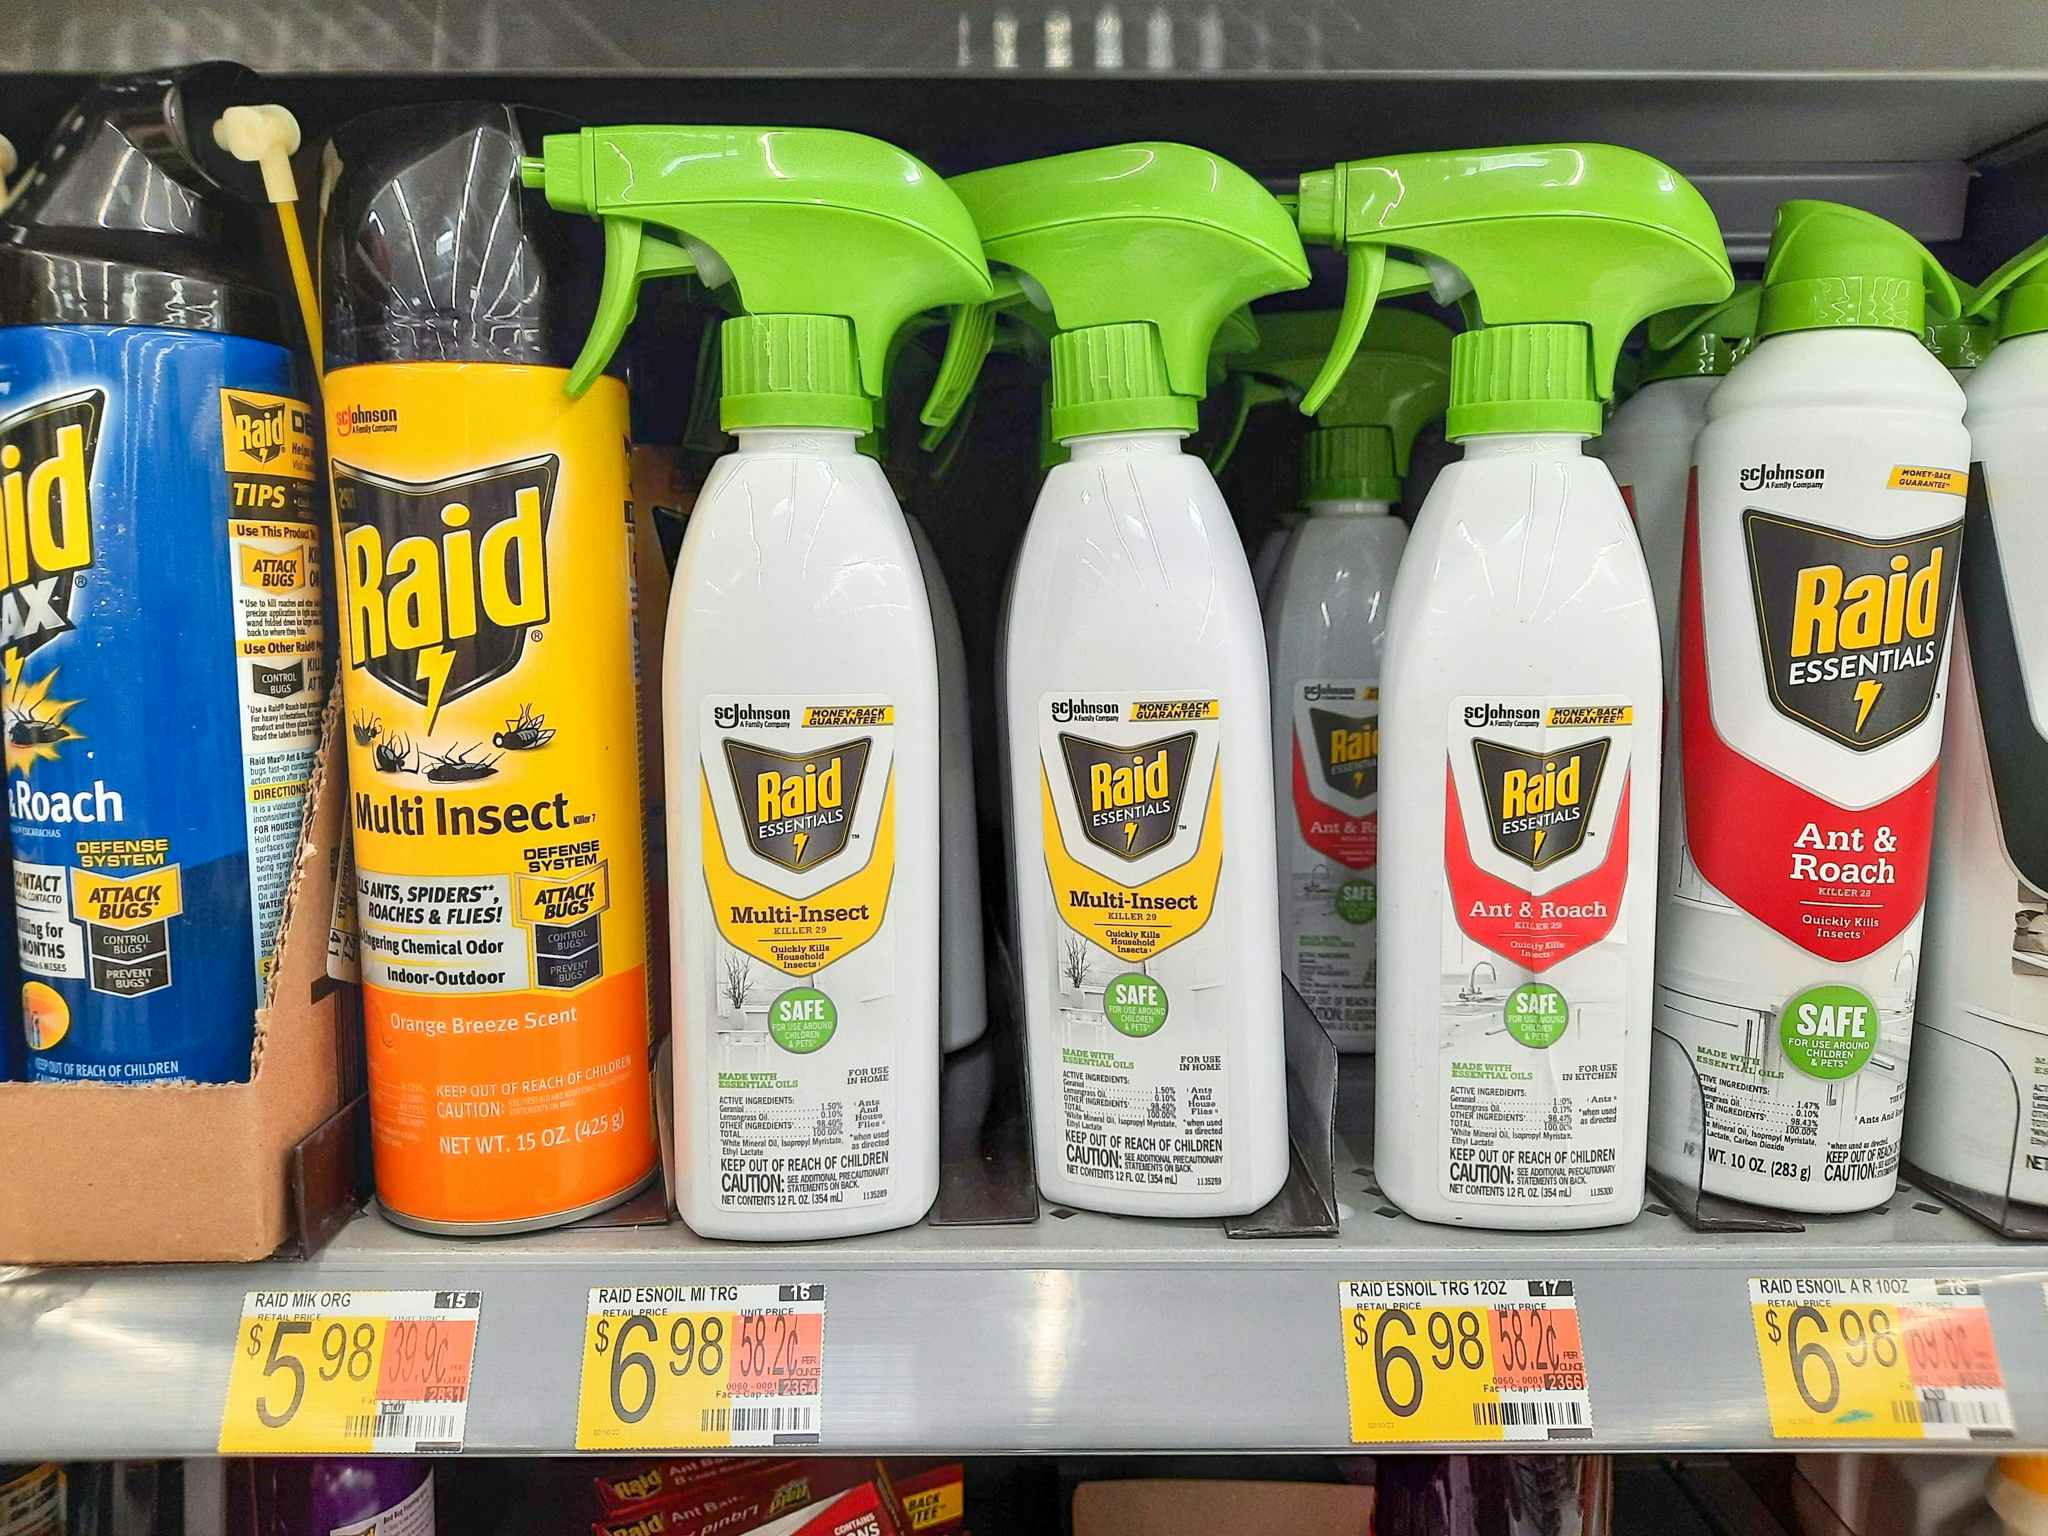 Raid Essentials at Walmart